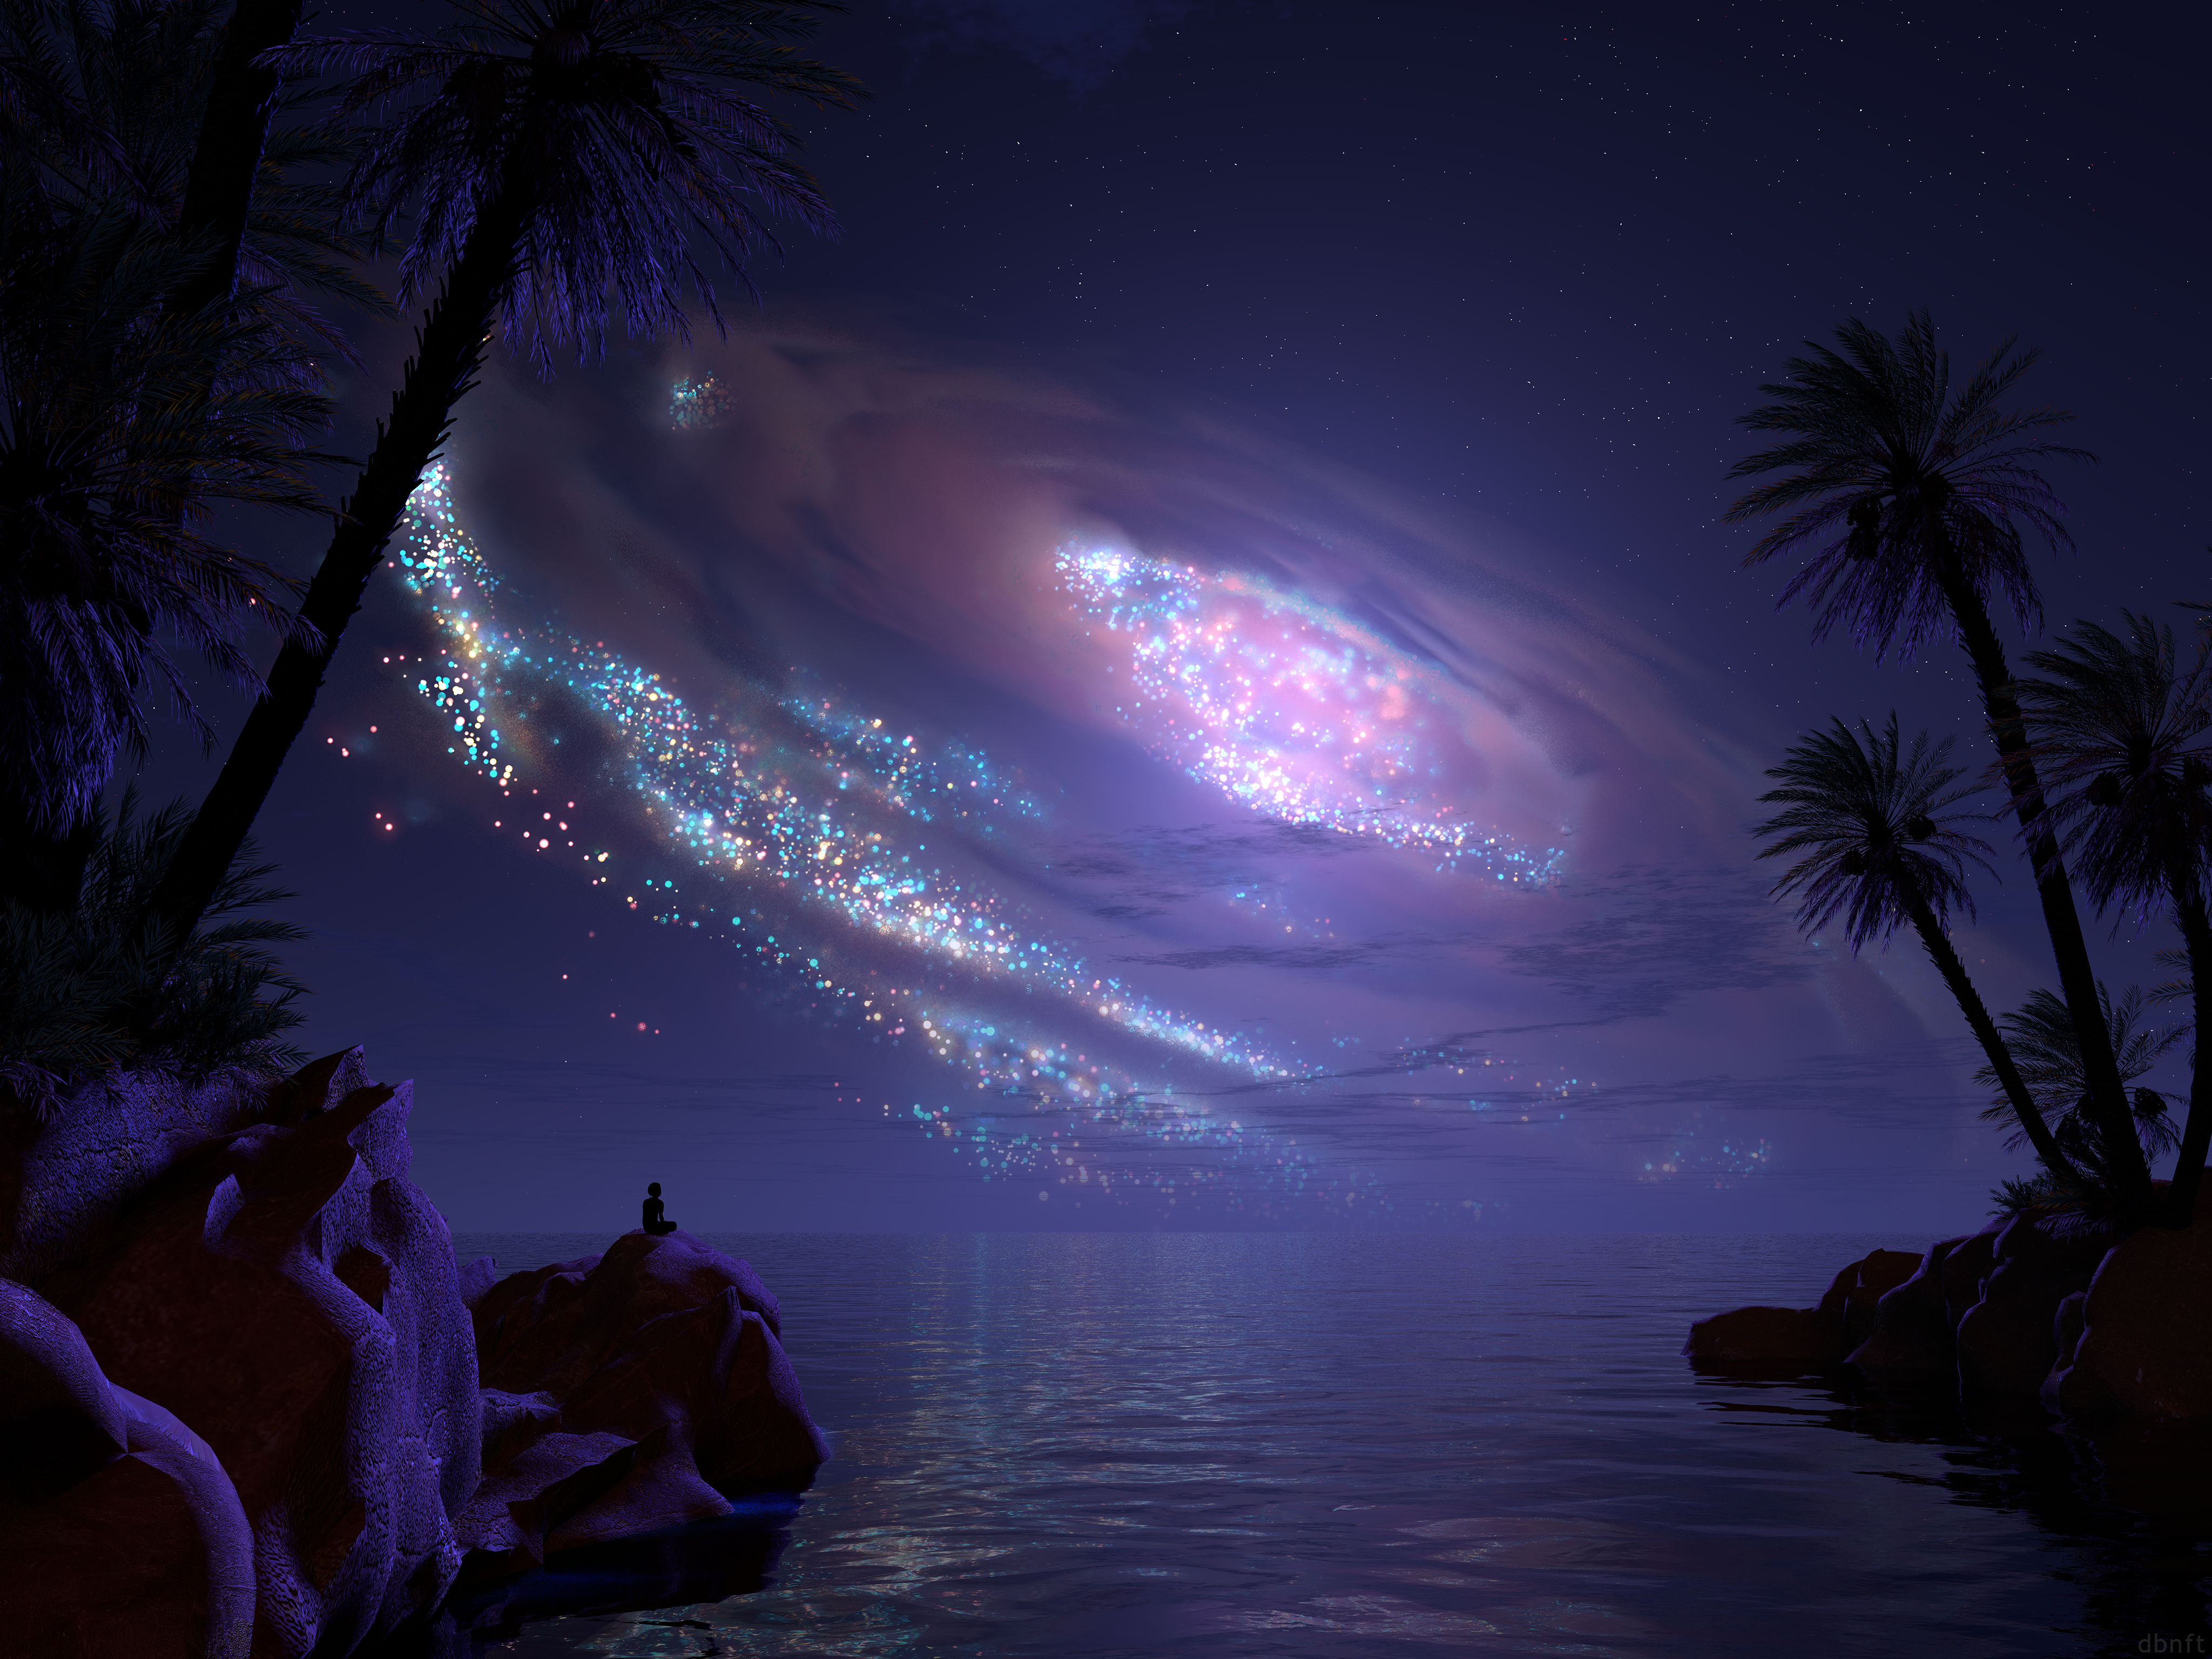 General 4096x3072 Ryan Bliss digital art artwork CGI nature landscape abstract night palm trees sea nightscape galaxy stars